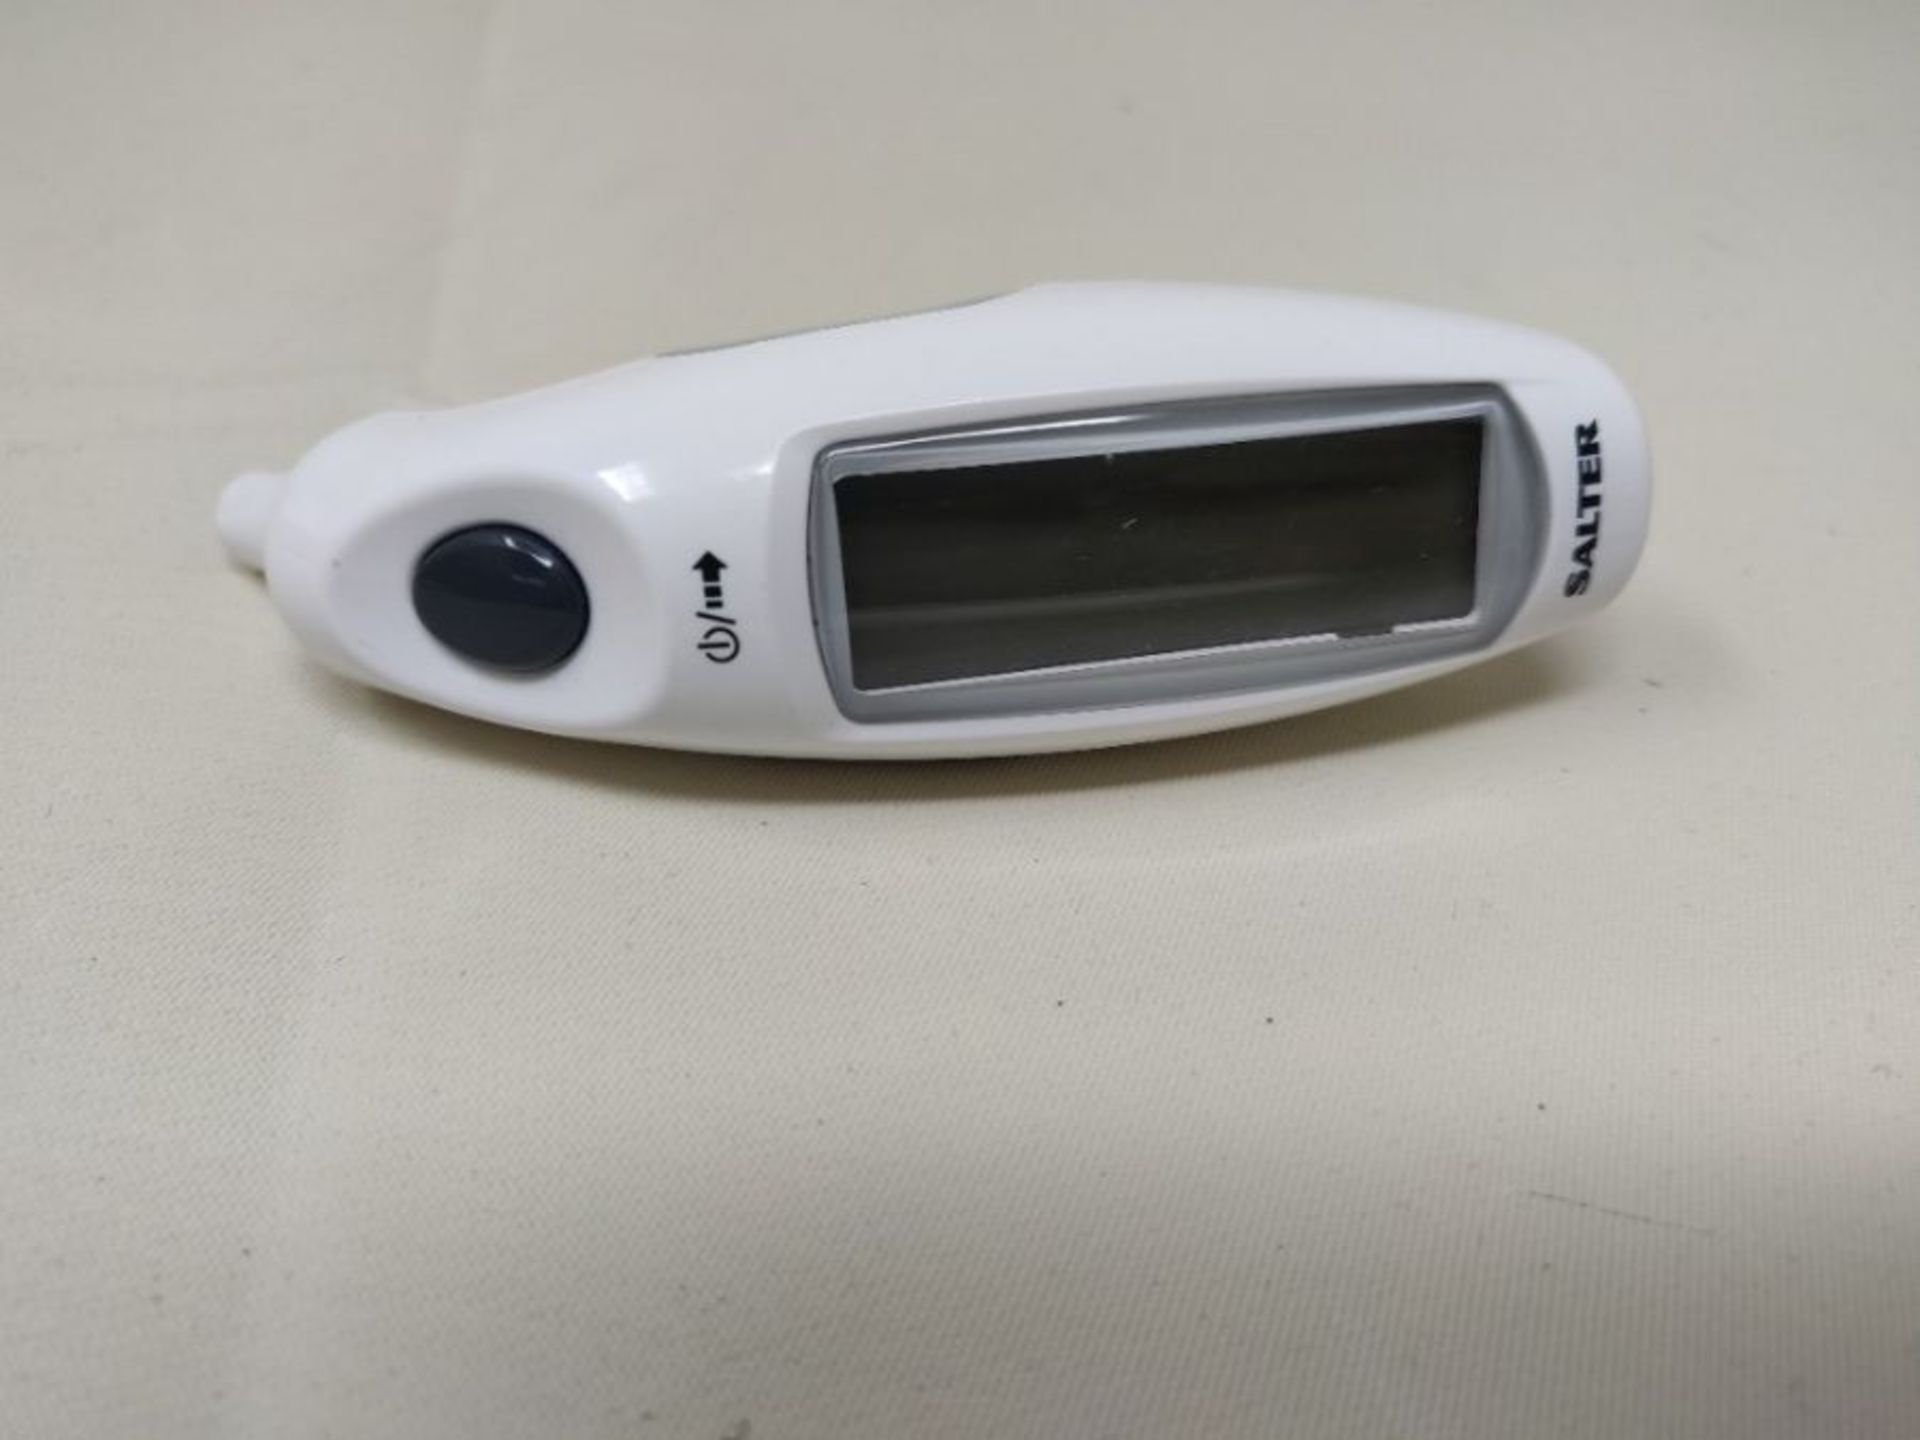 Salter Digital Medical Ear Thermometer with Jumbo Display â¬  Instant Measurement - Image 2 of 2